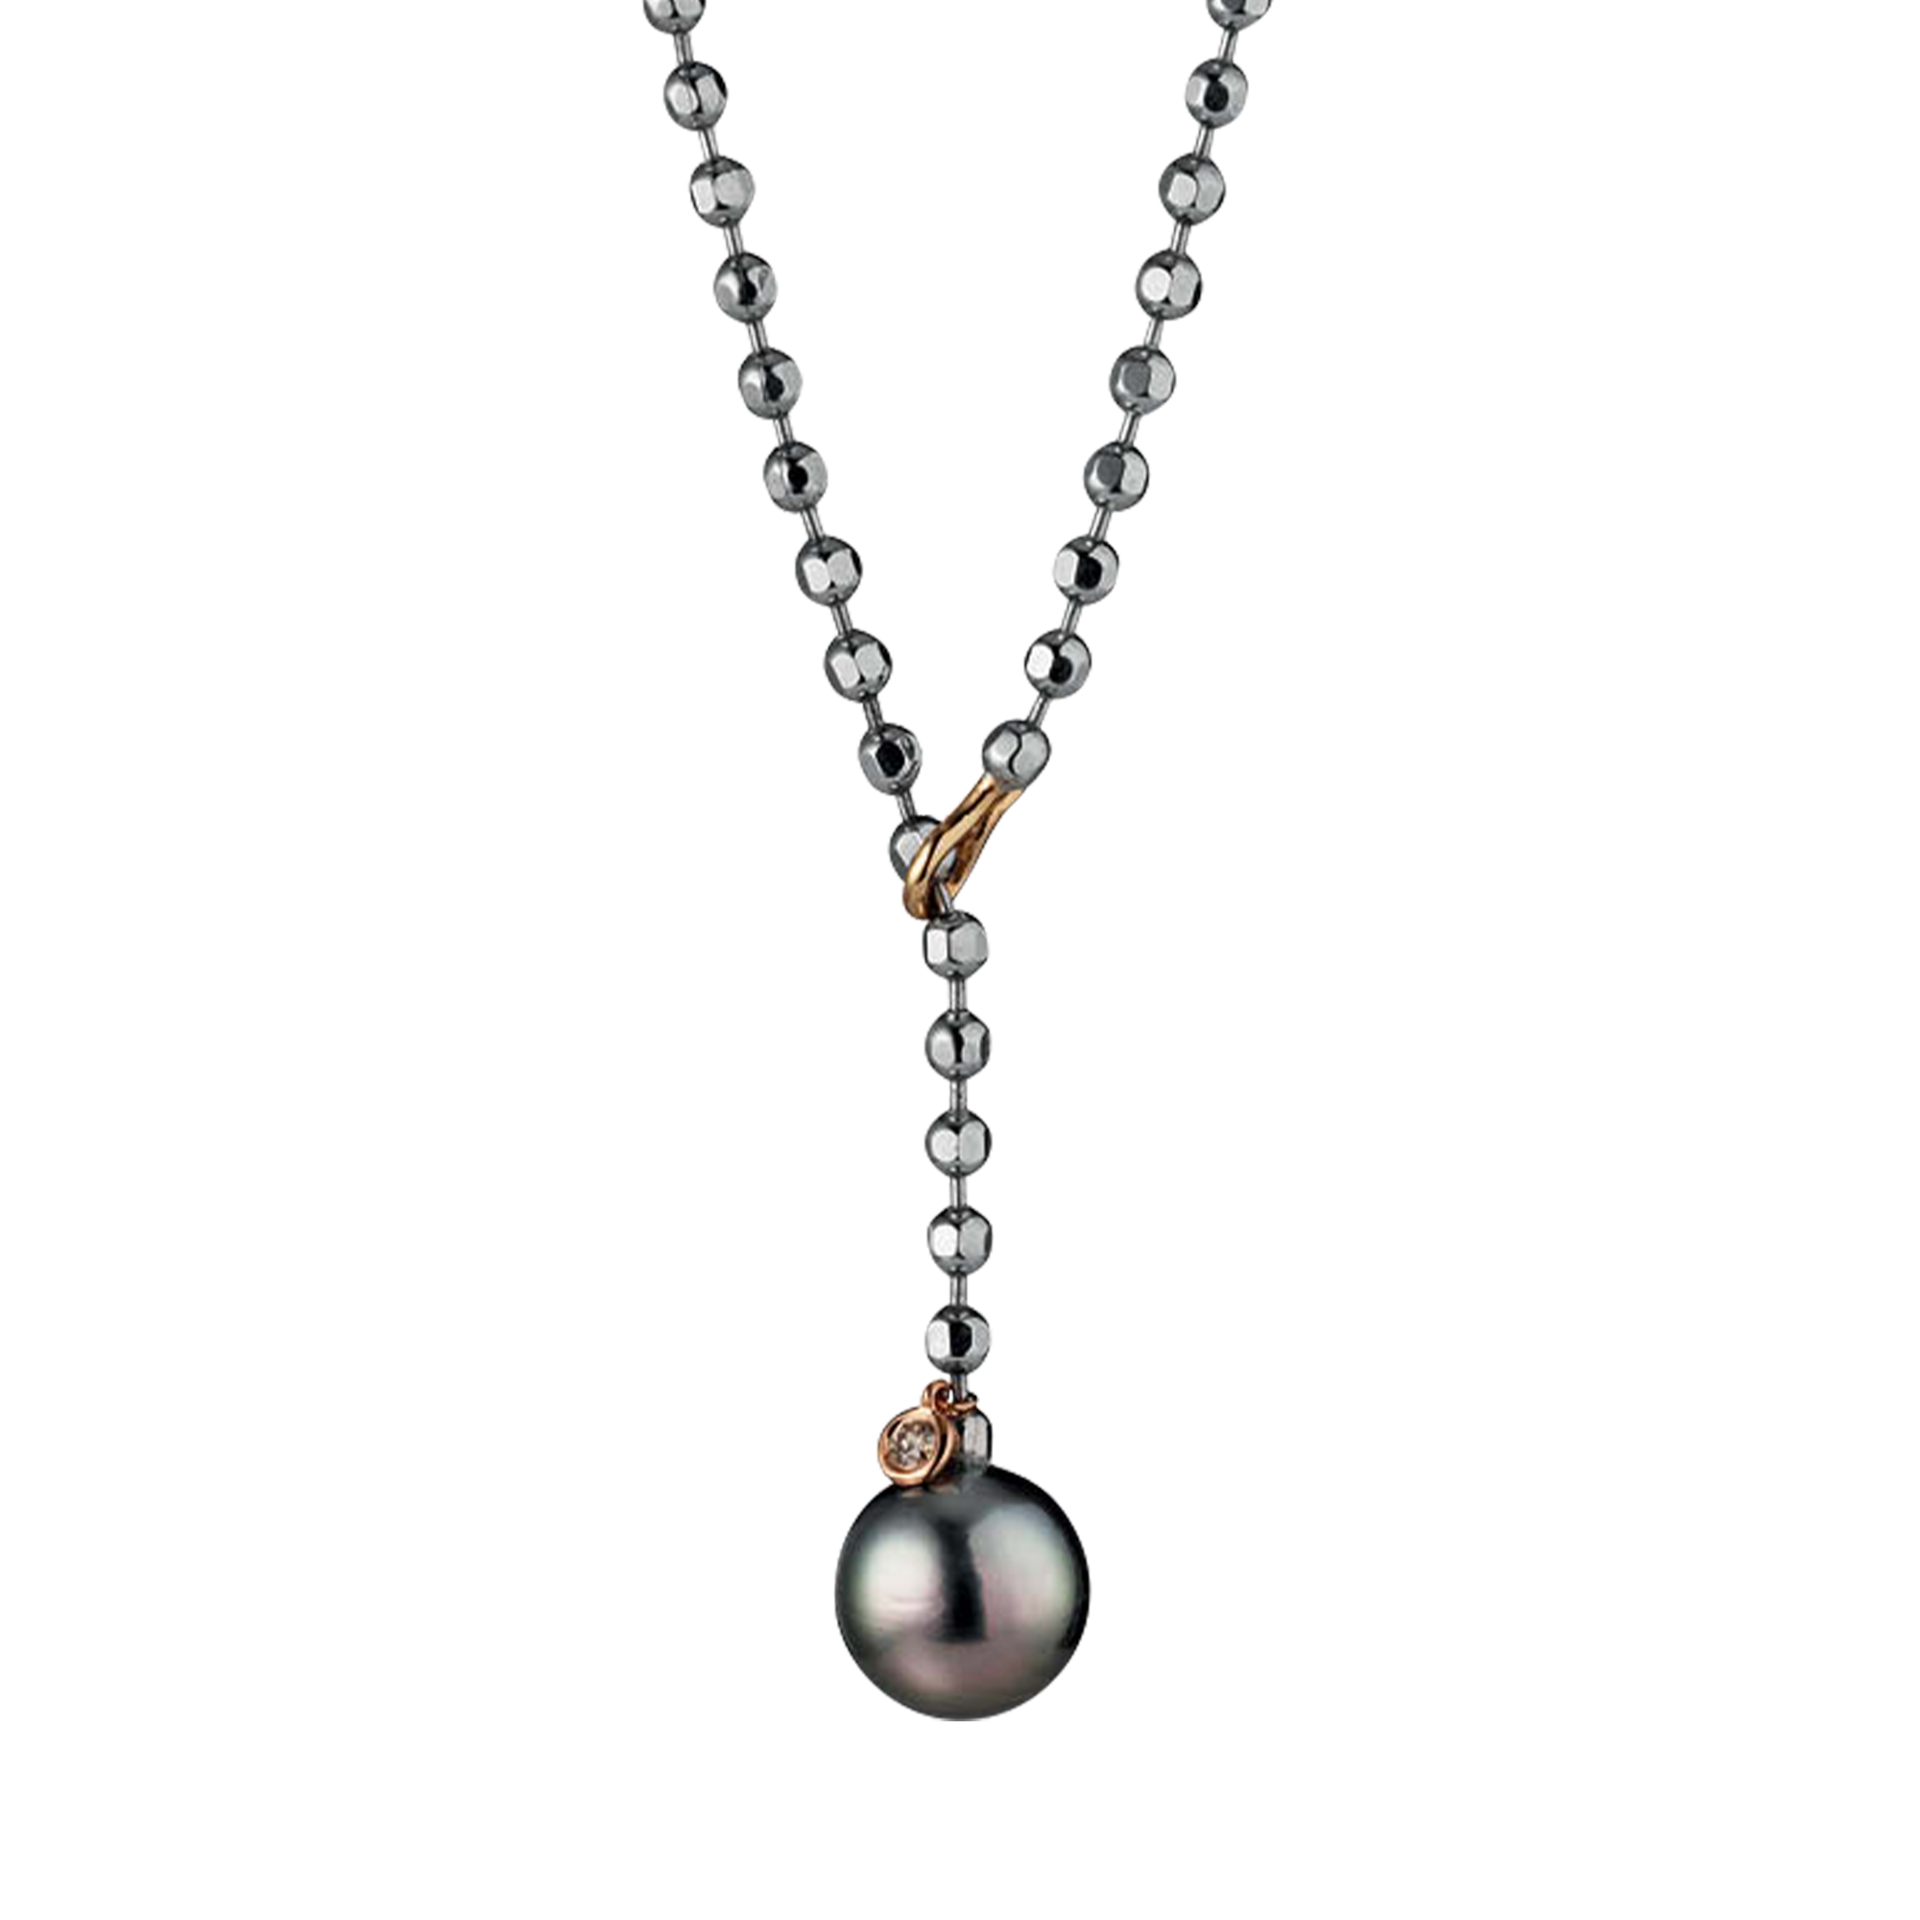 Gellner Flex necklace with pendant